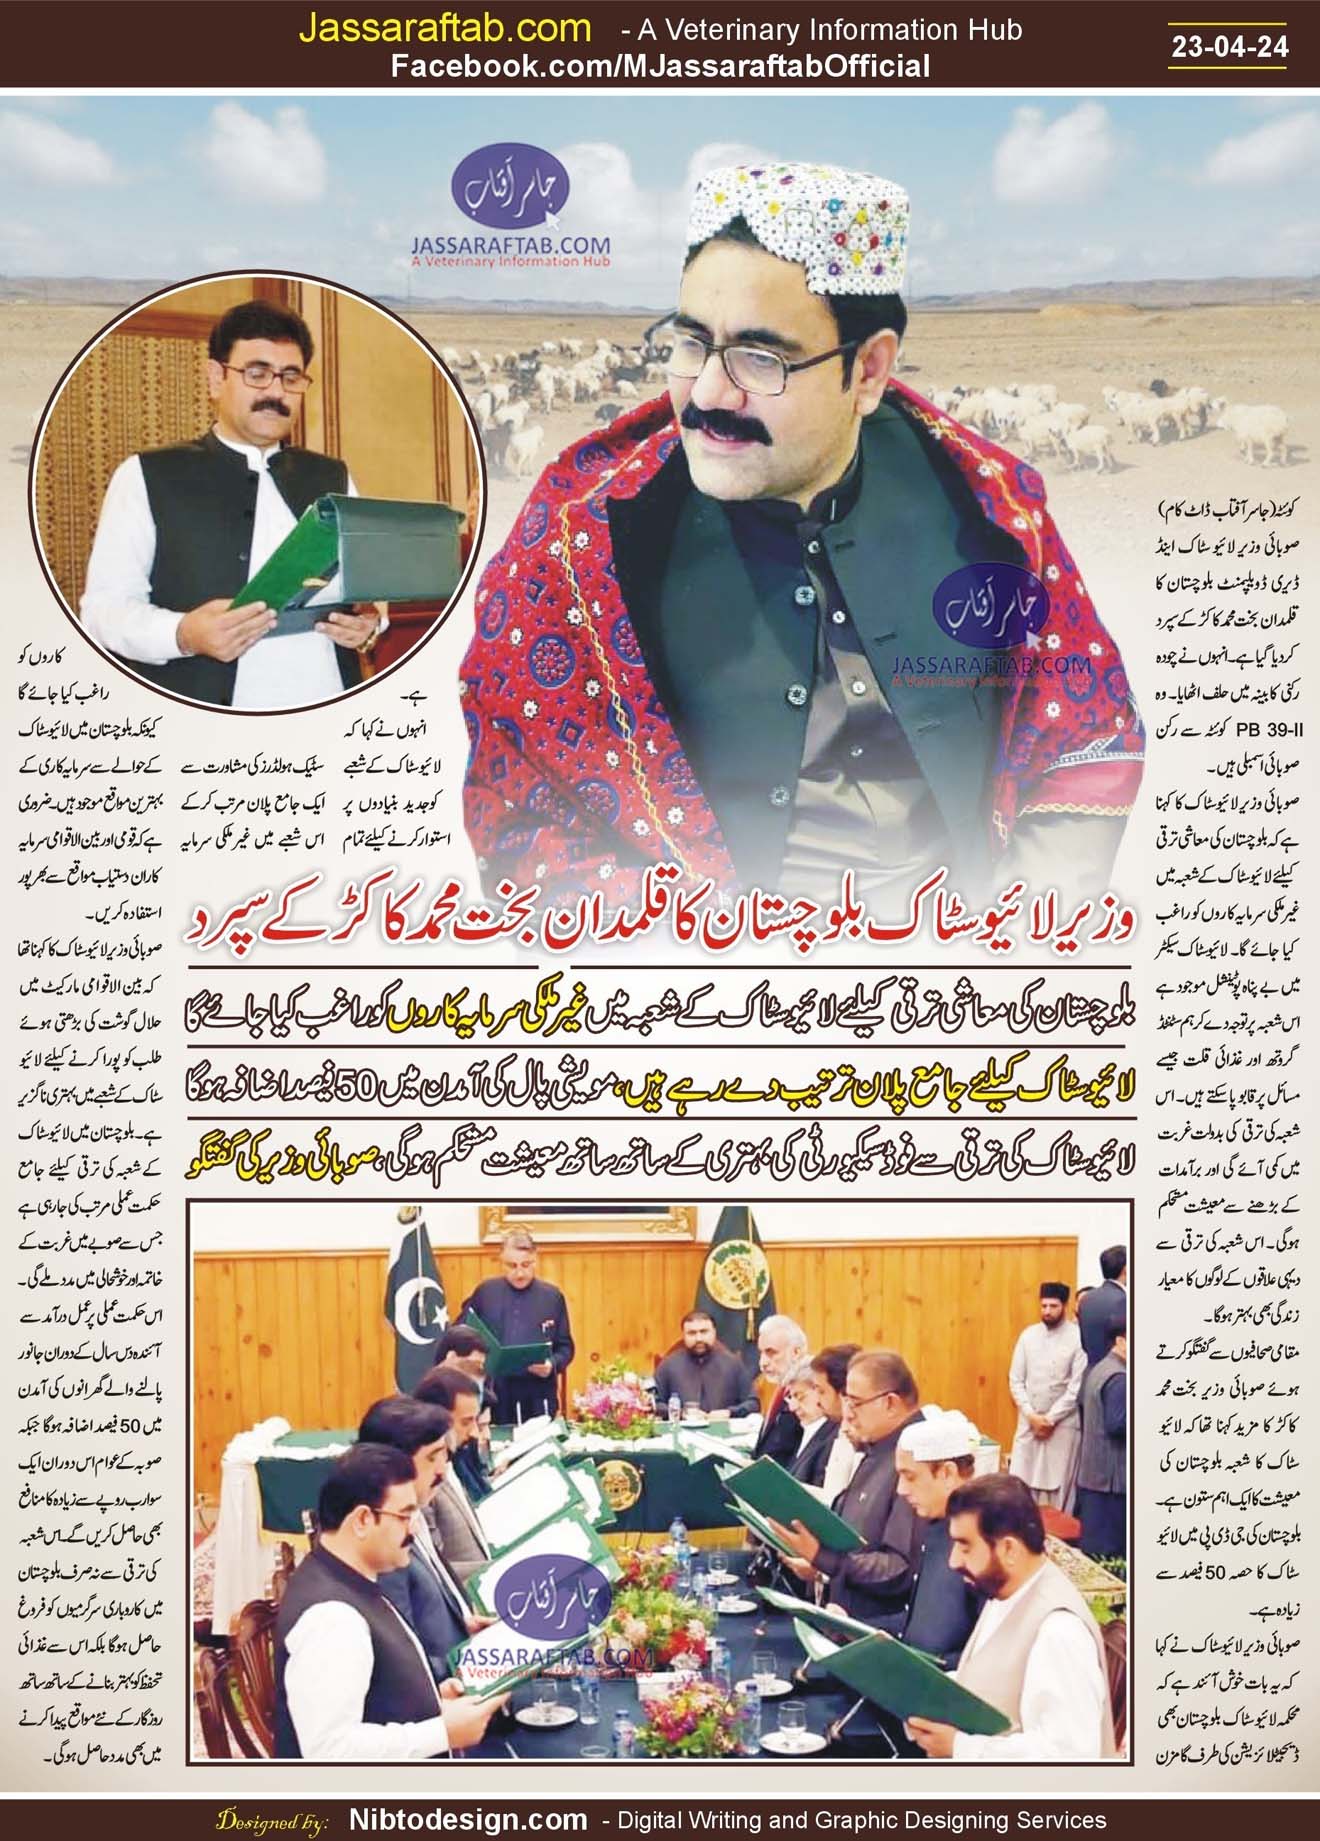 Minister Livestock Balochistan Bakht Muhammad Kakar